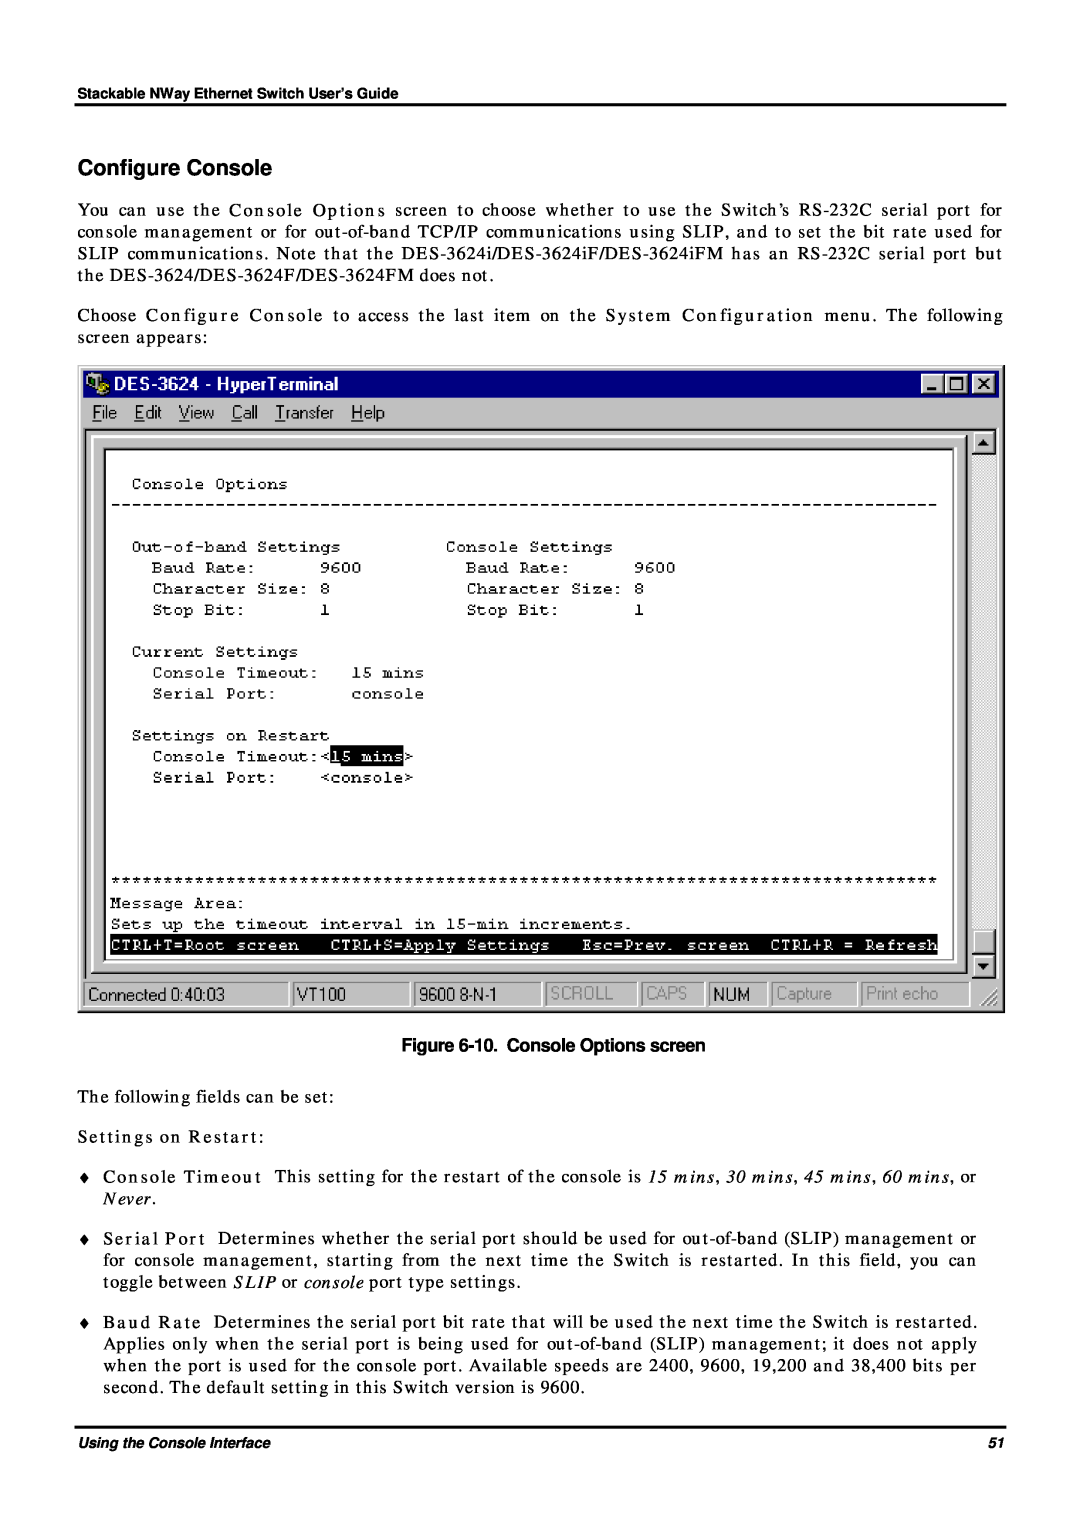 D-Link DES-3624 manual Configure Console, 10. Console Options screen, Settings on Restart 